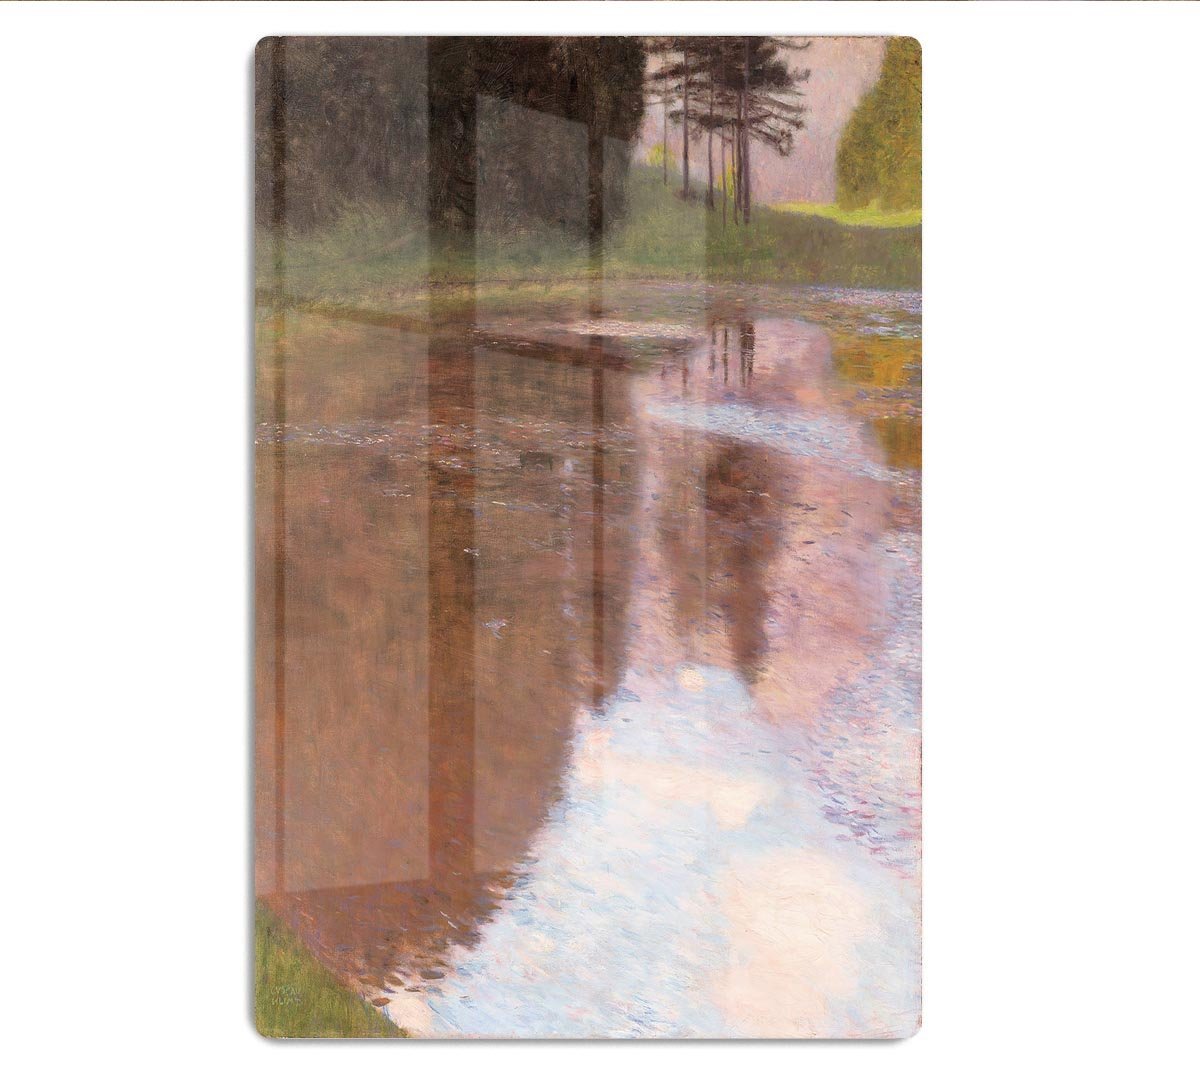 Tranquil Pond near Salzburg by Klimt HD Metal Print